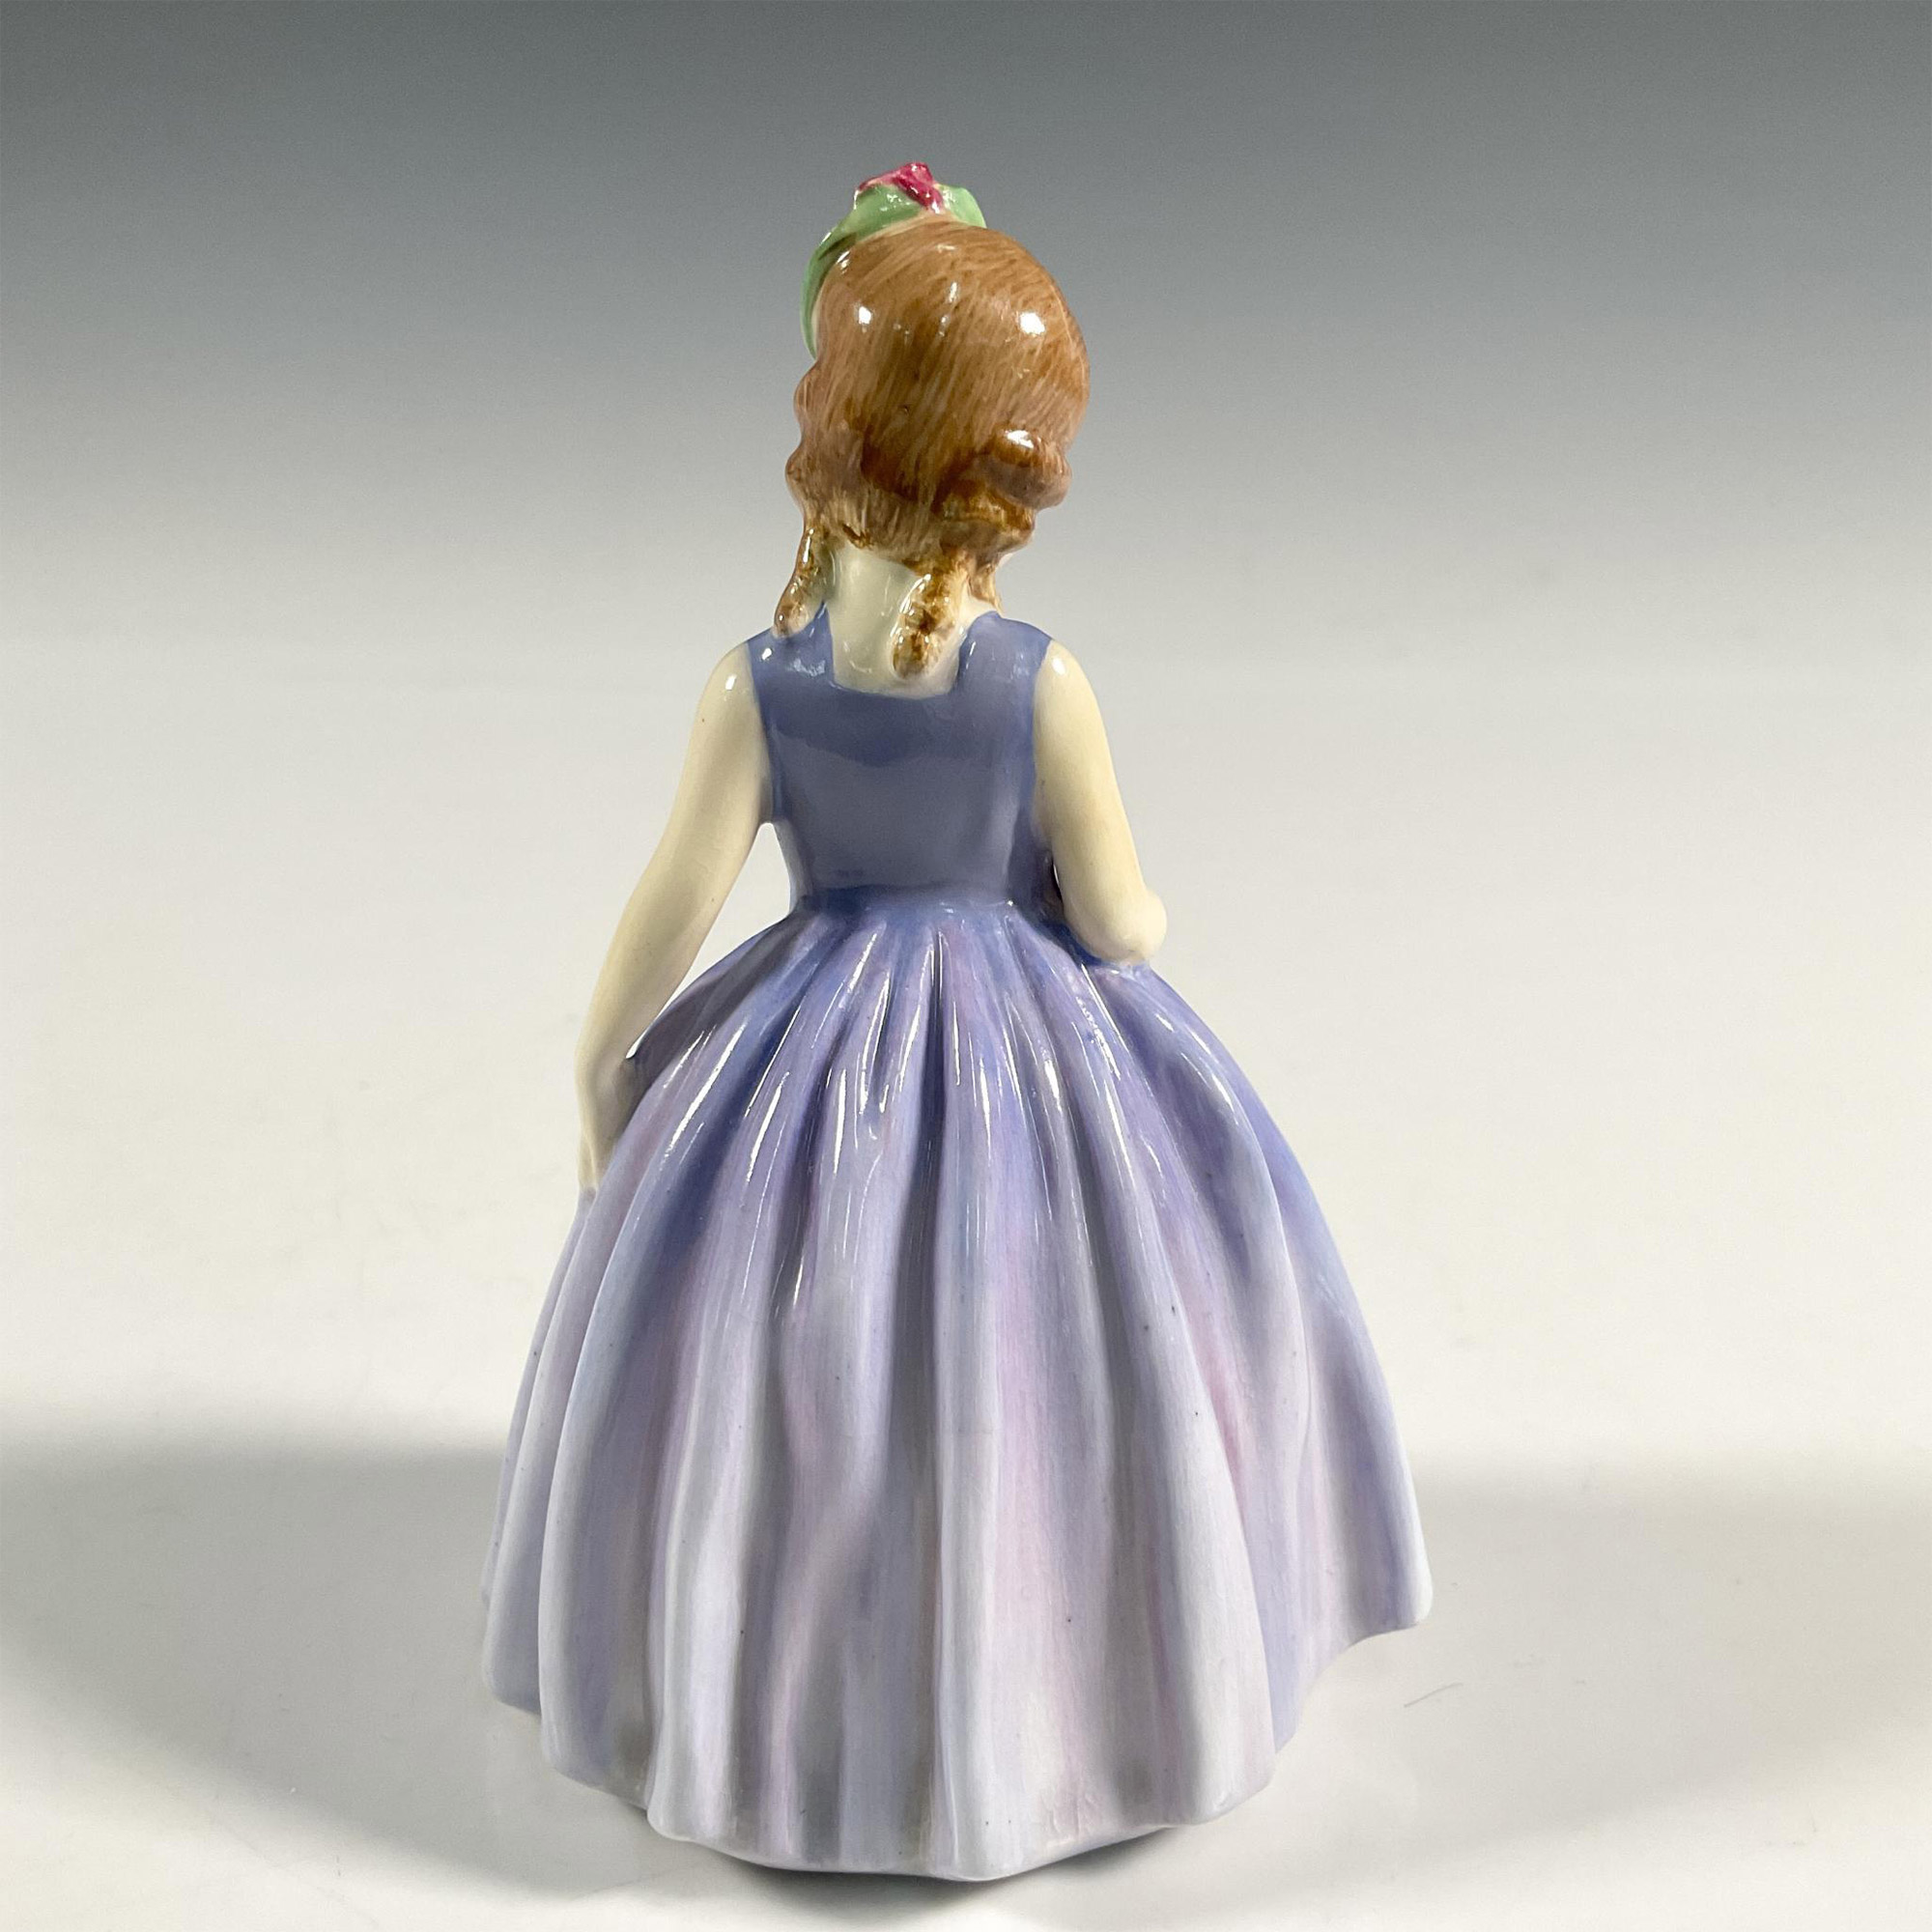 Nana HN1767 - Royal Doulton Figurine - Image 2 of 3